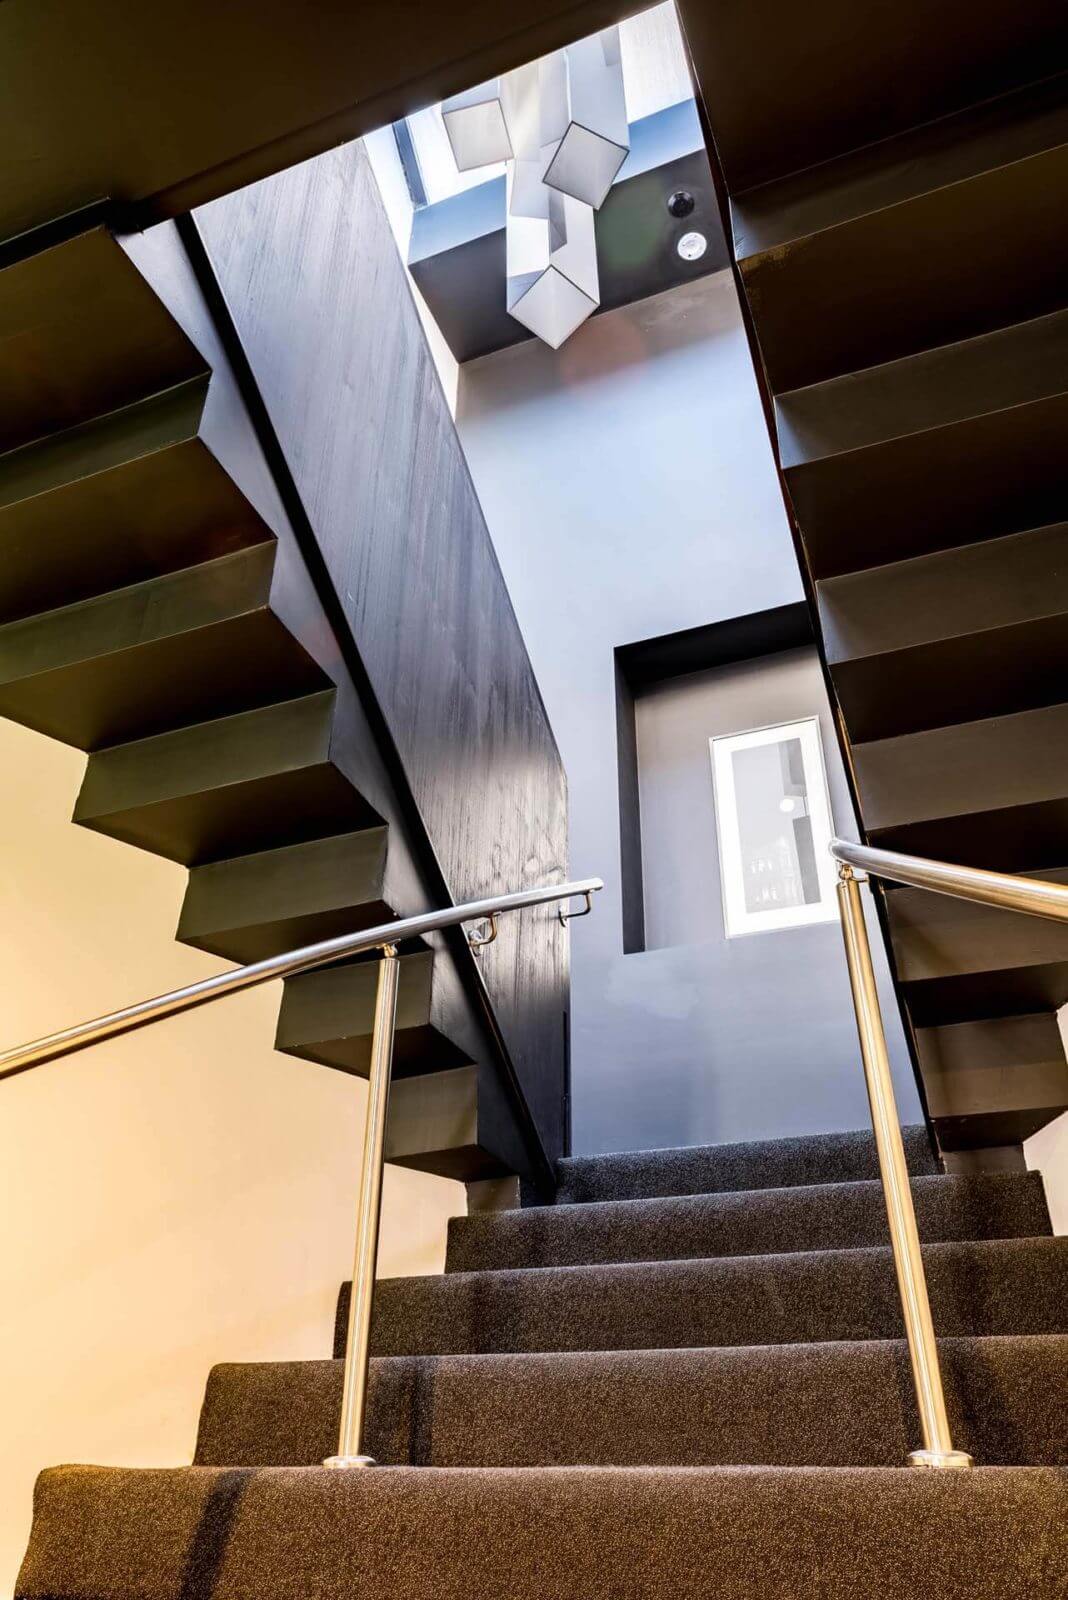 Floor 2 stairwell